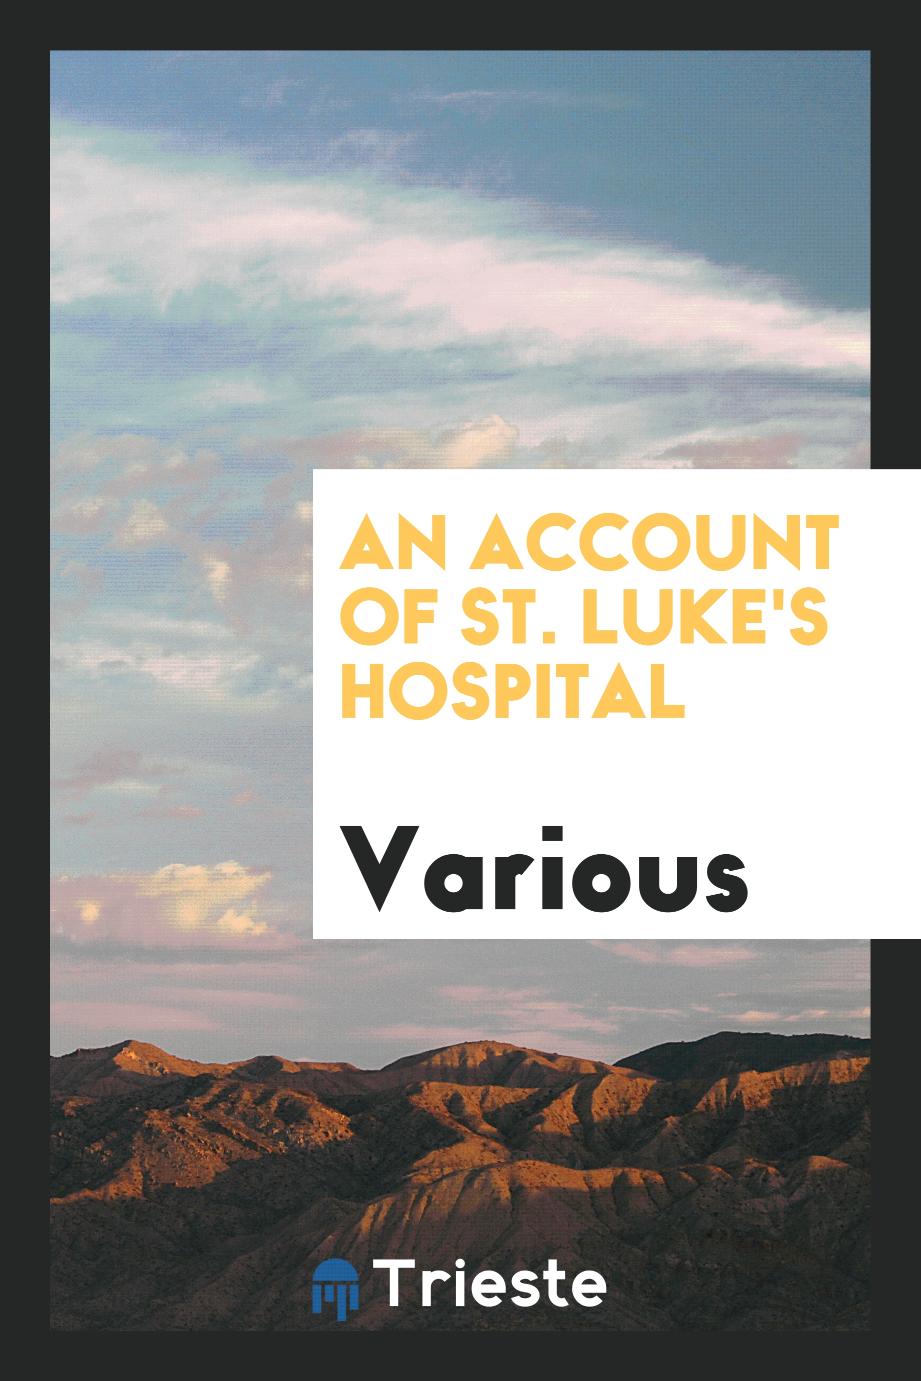 An Account of St. Luke's Hospital